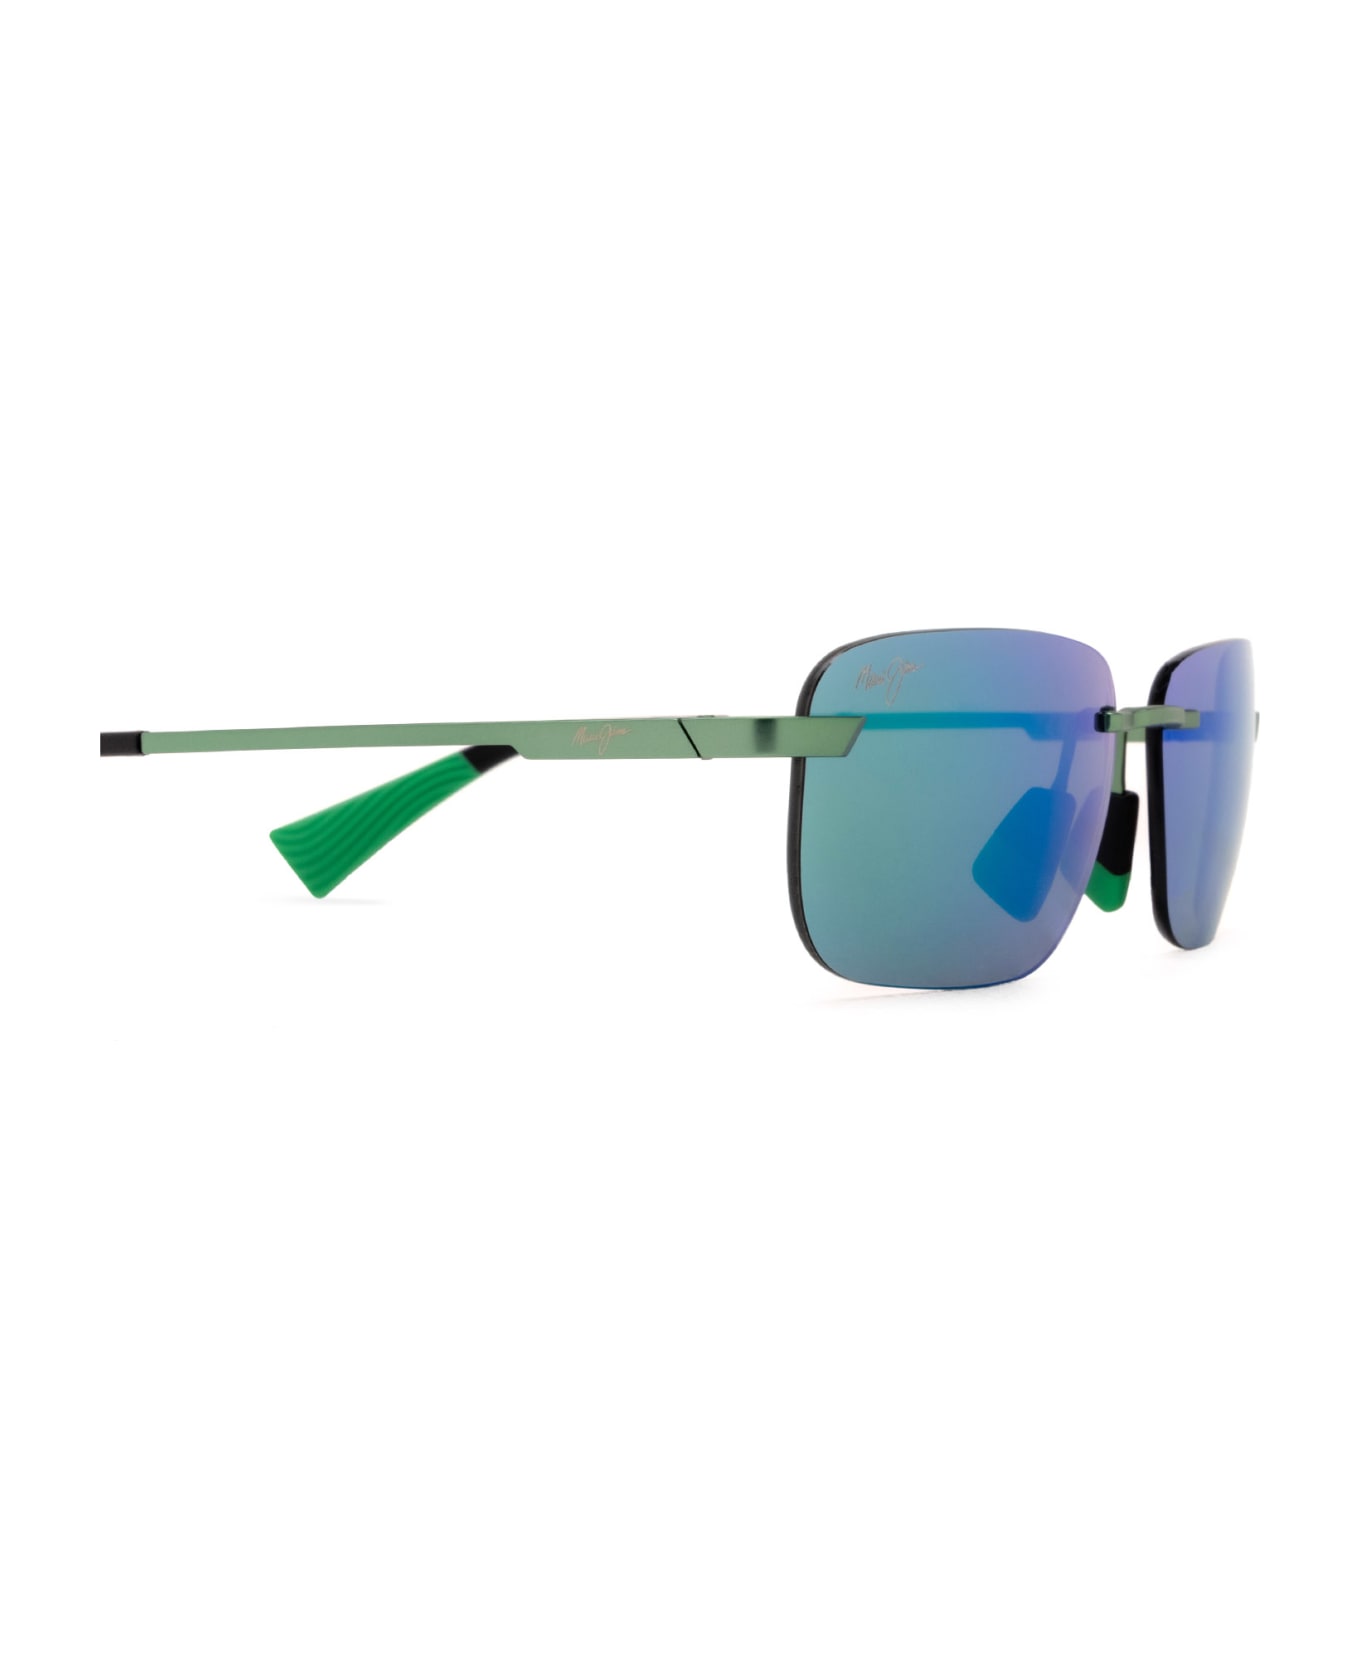 Maui Jim Mj624 Matte Trans Green Sunglasses - Matte Trans Green サングラス